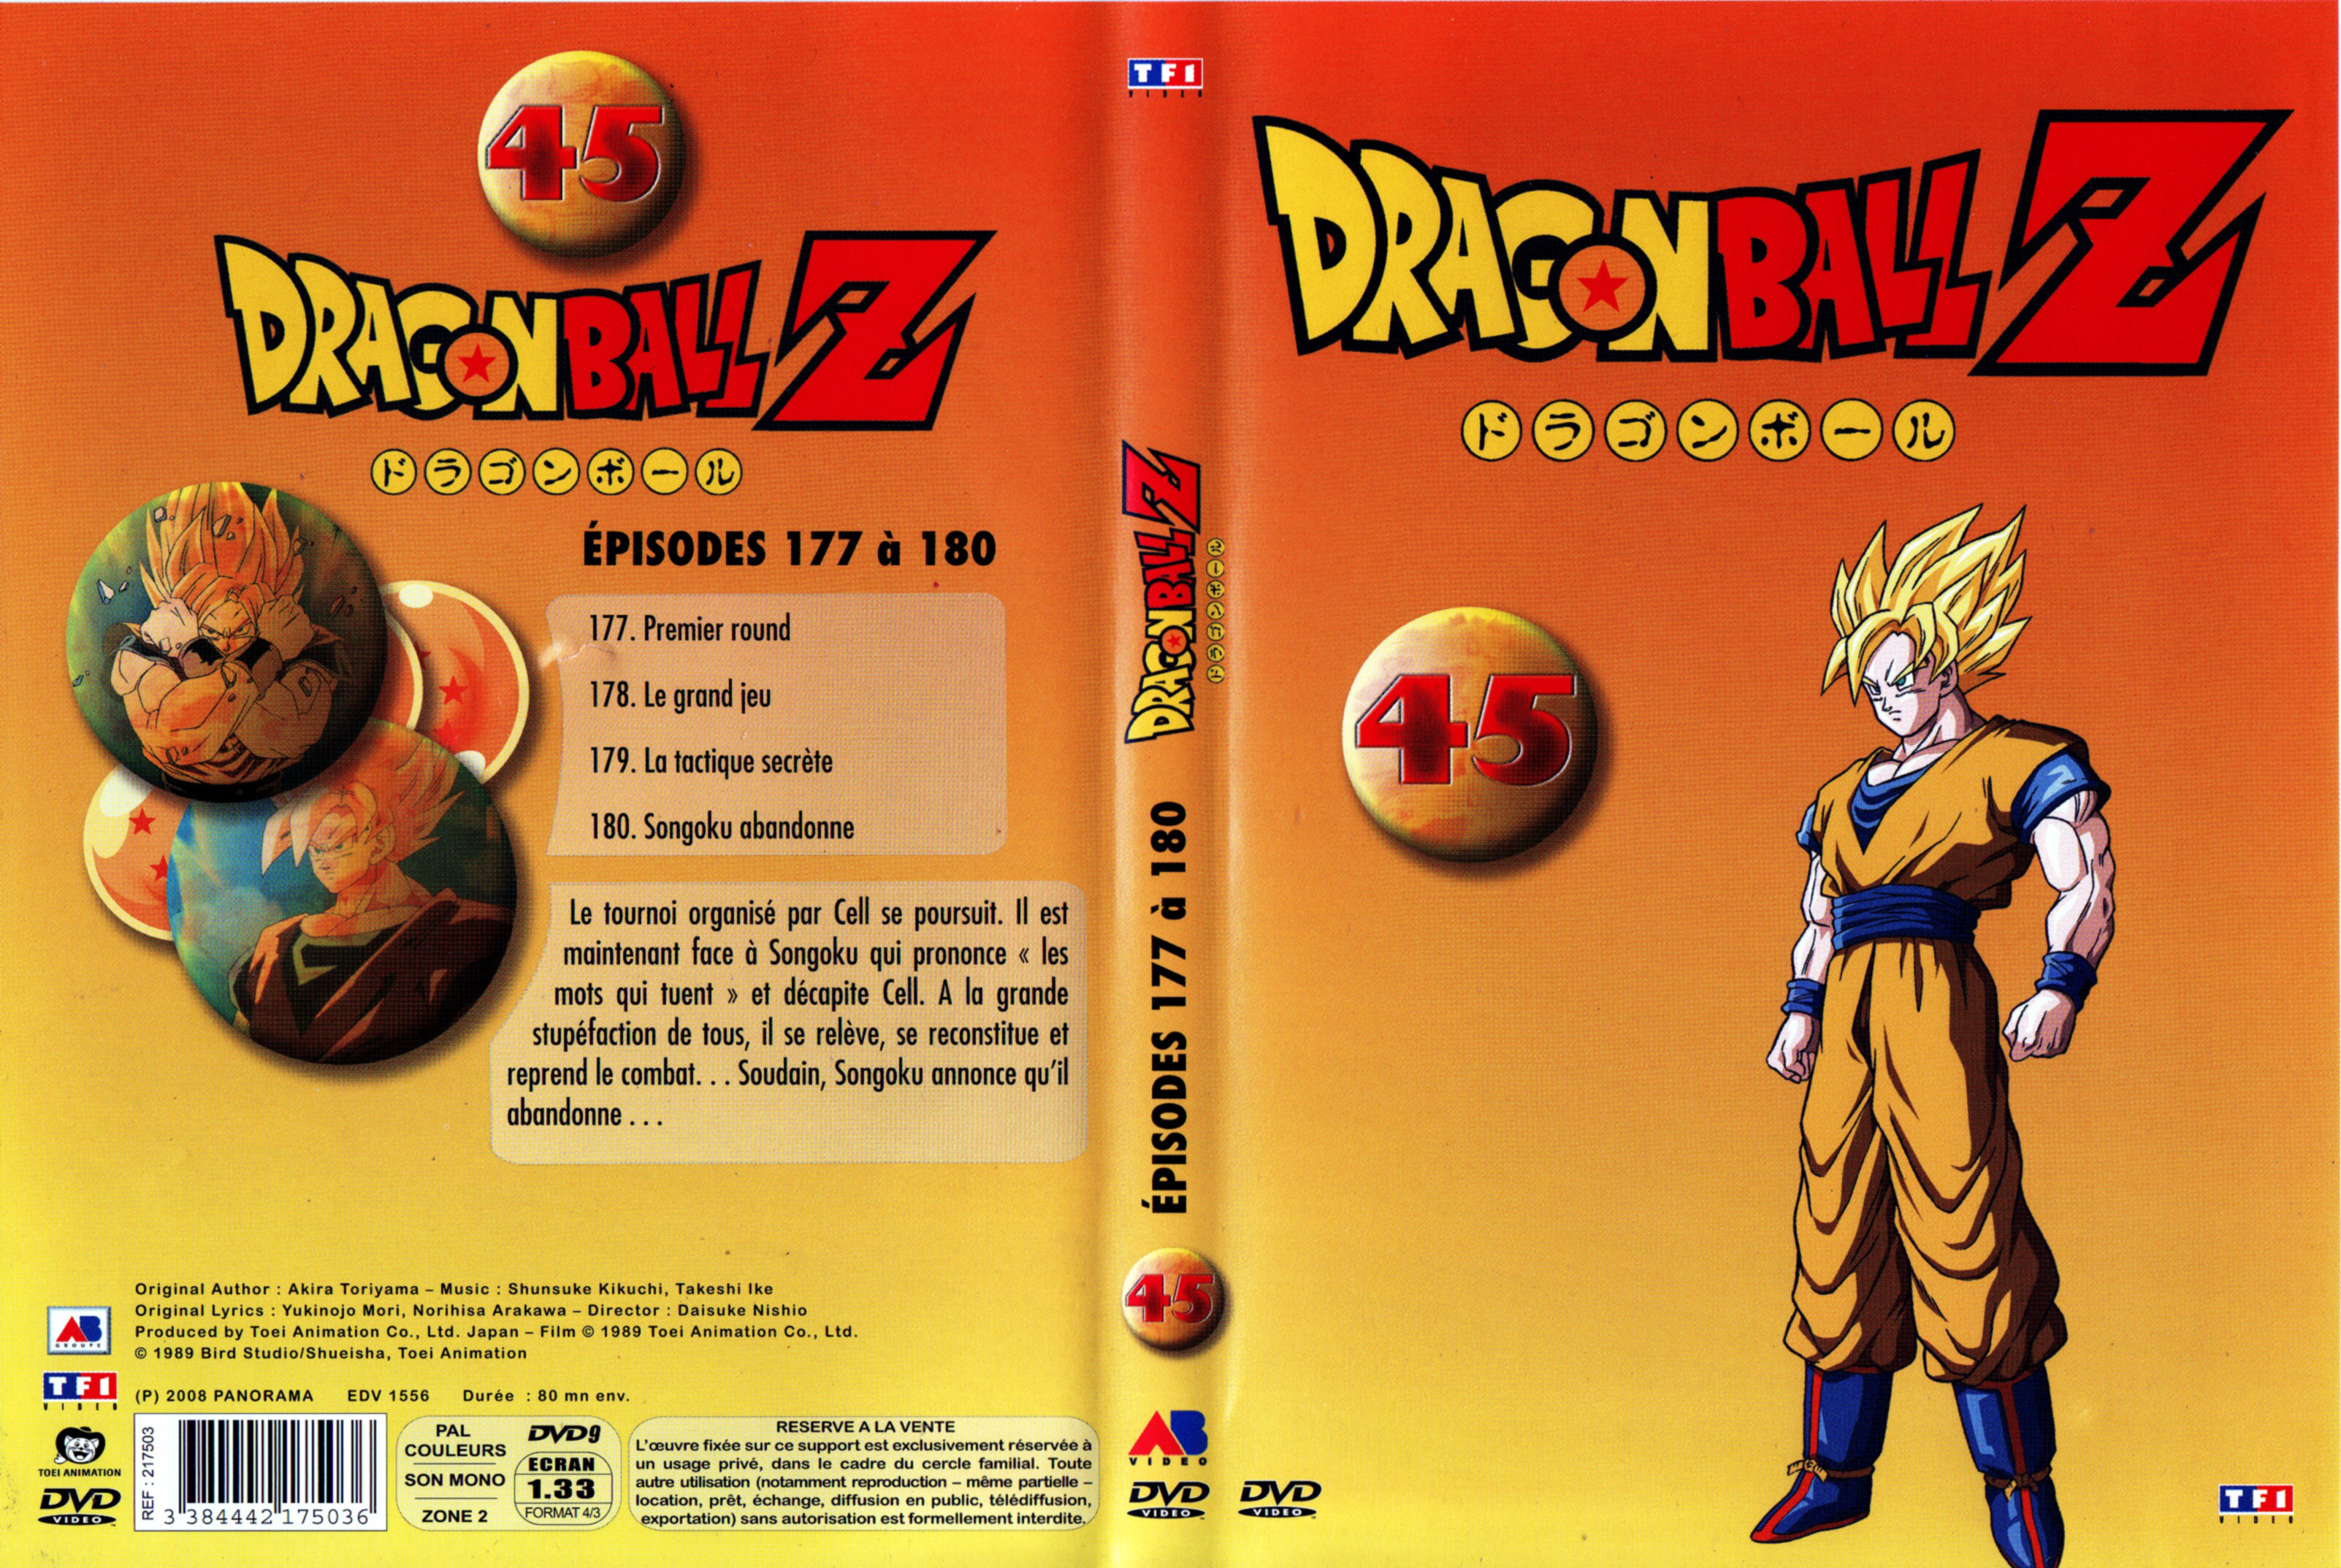 Jaquette DVD Dragon Ball Z vol 45